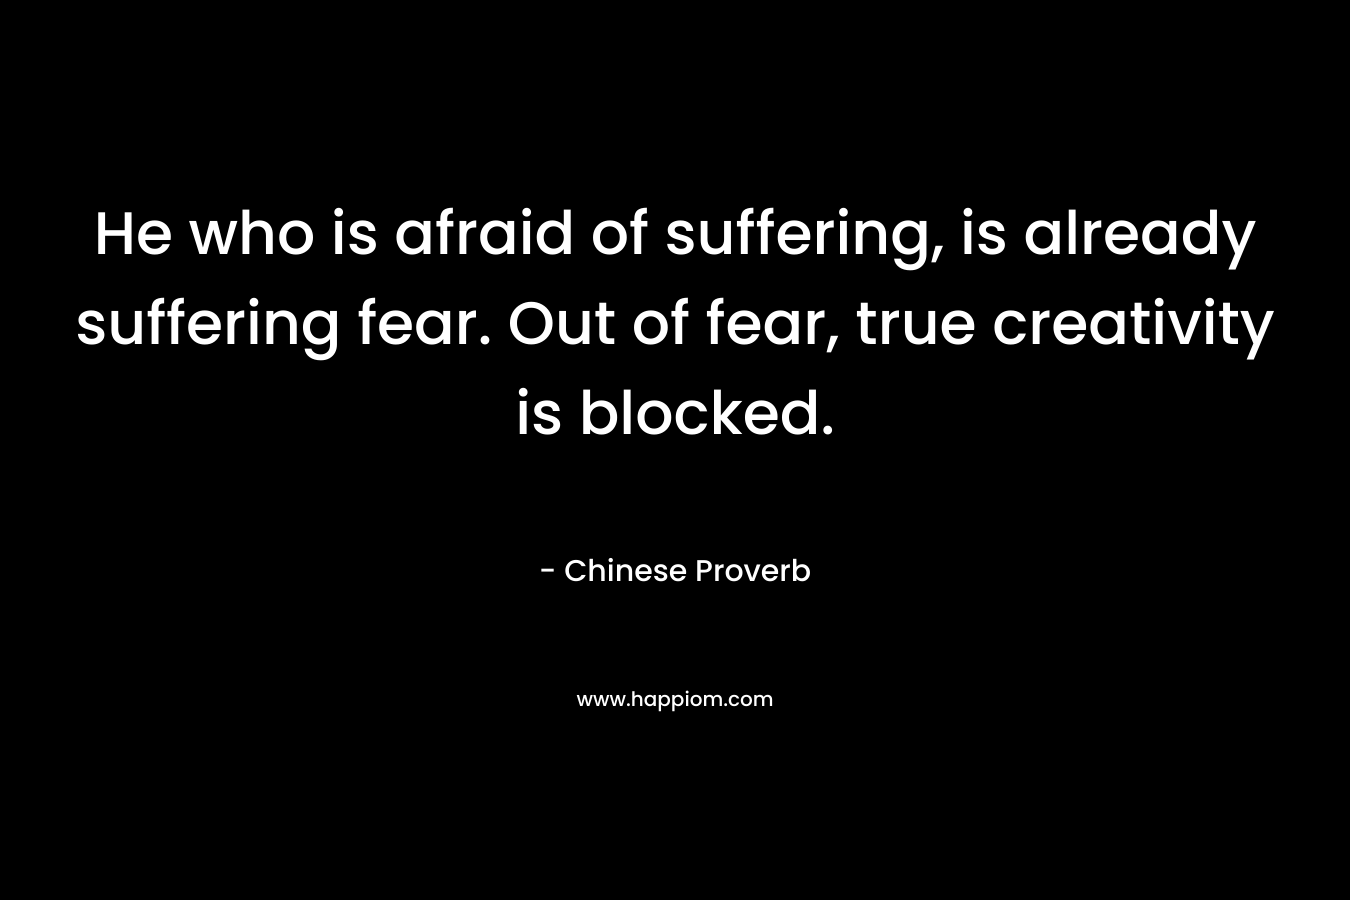 He who is afraid of suffering, is already suffering fear. Out of fear, true creativity is blocked.